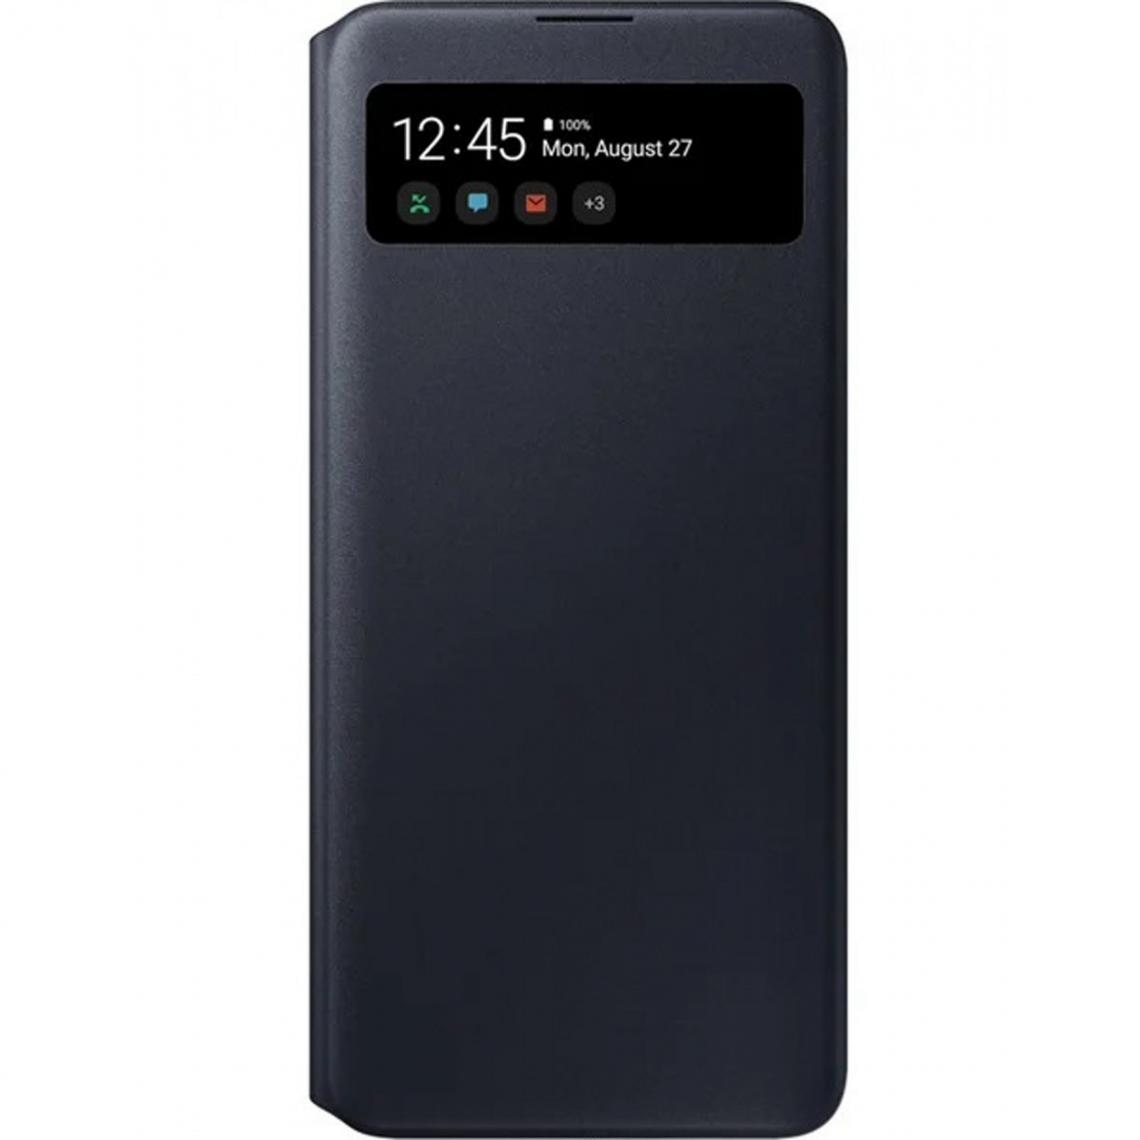 Frenchcase - Etui à clapet original view cover EF-EG770 pour Samsung S10 lite - Coque, étui smartphone